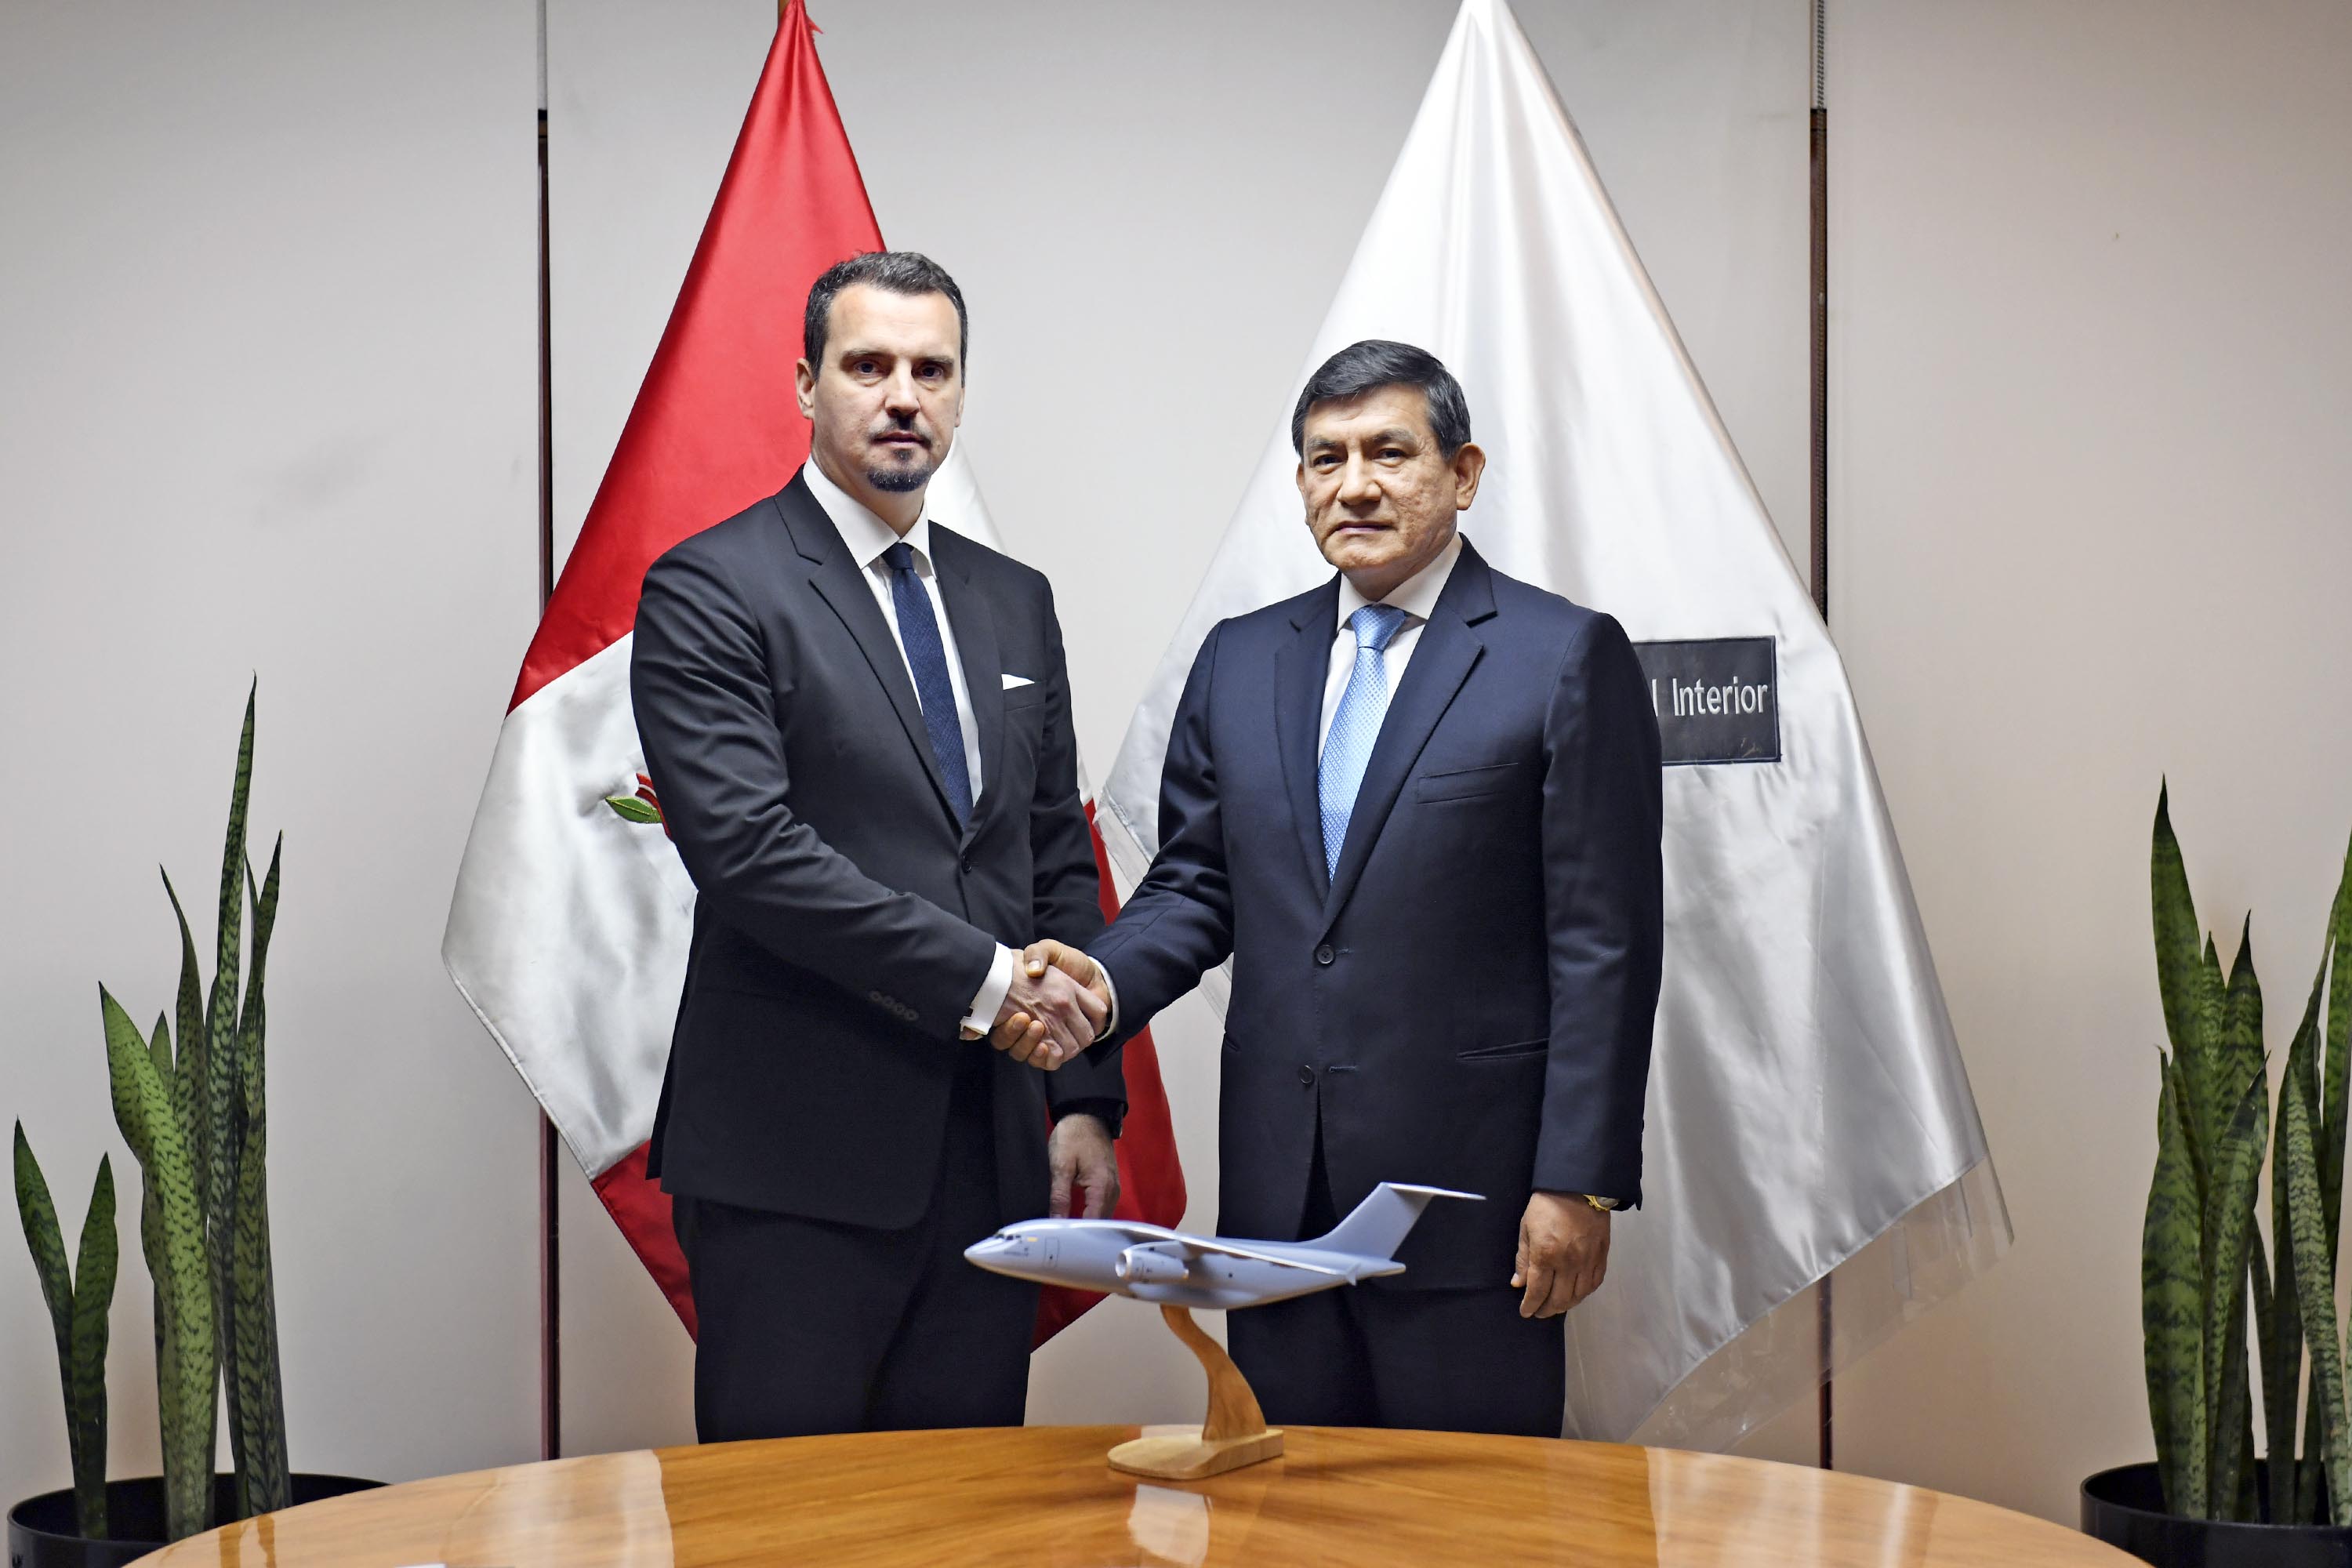 Ukroboronprom Will Modernize an Aircraft for the Ministry of Interior of Peru